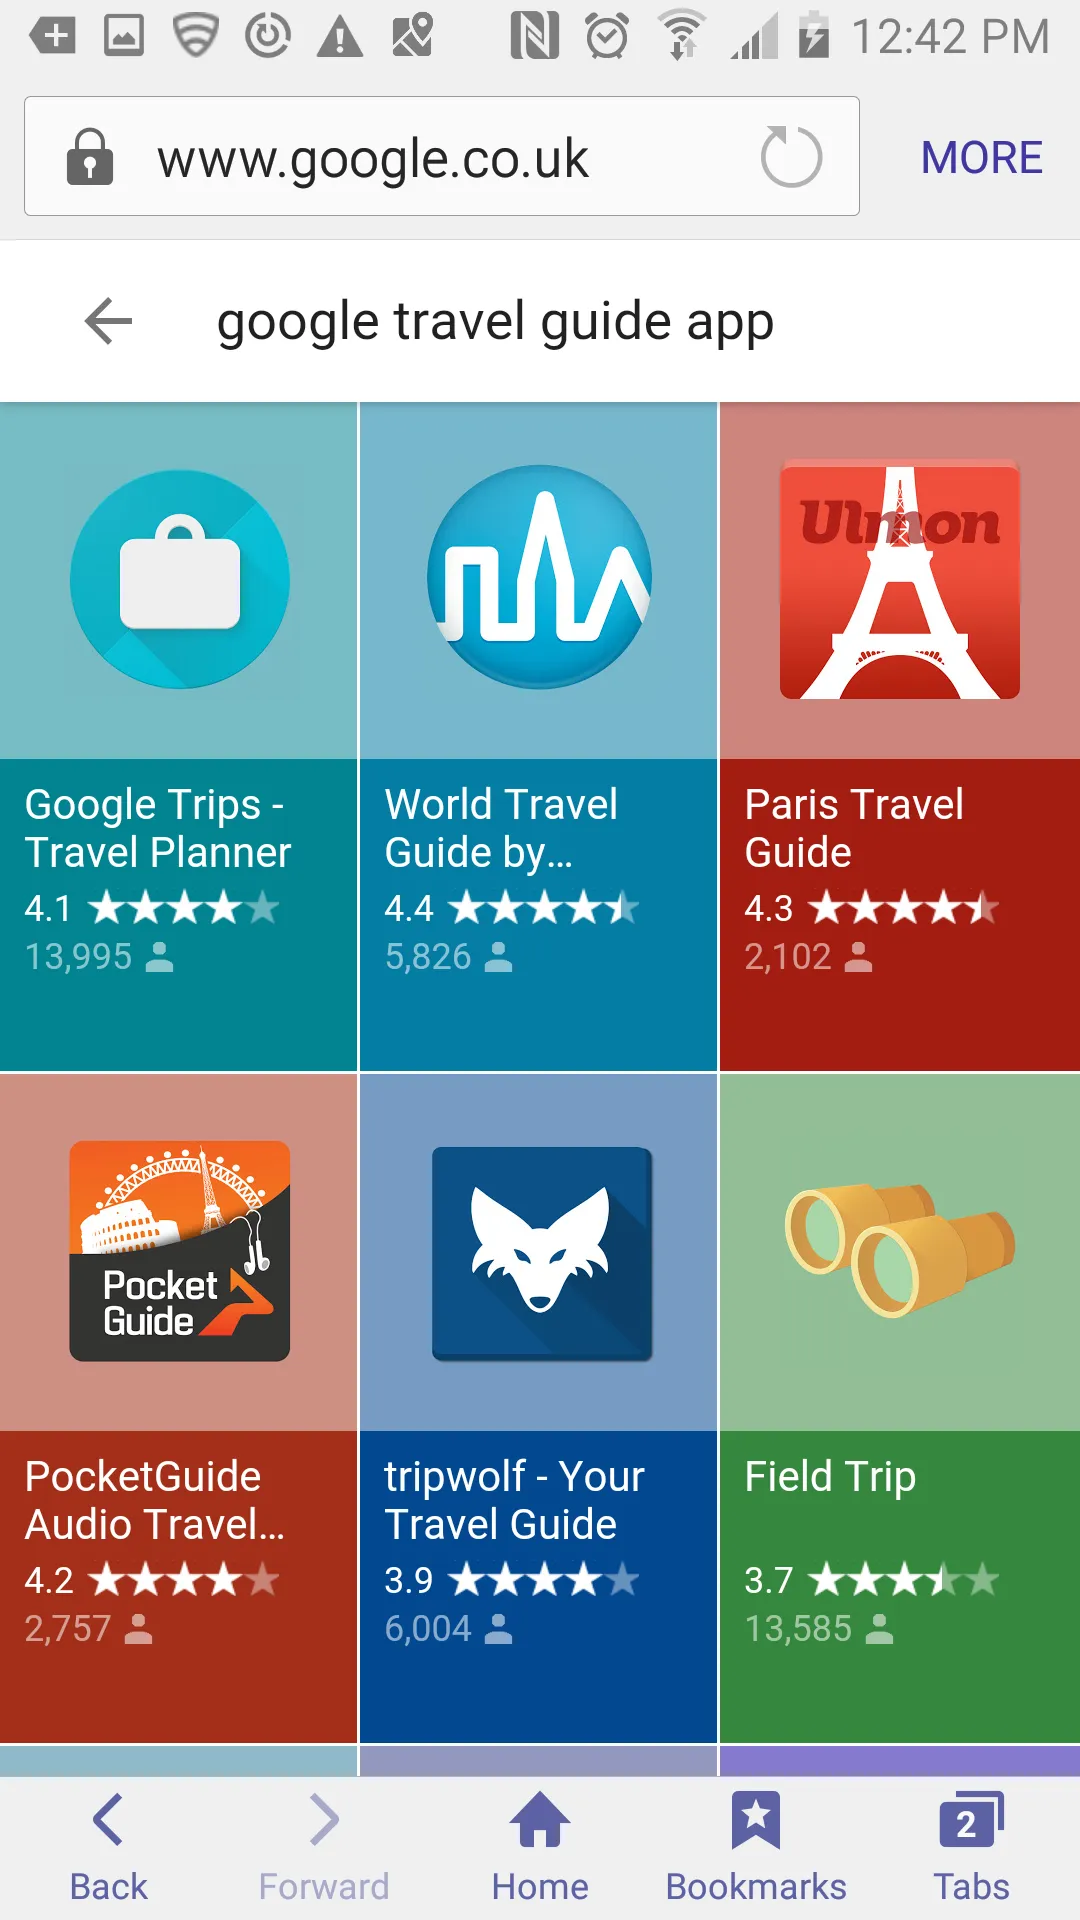 Google Travel Guide apps 5